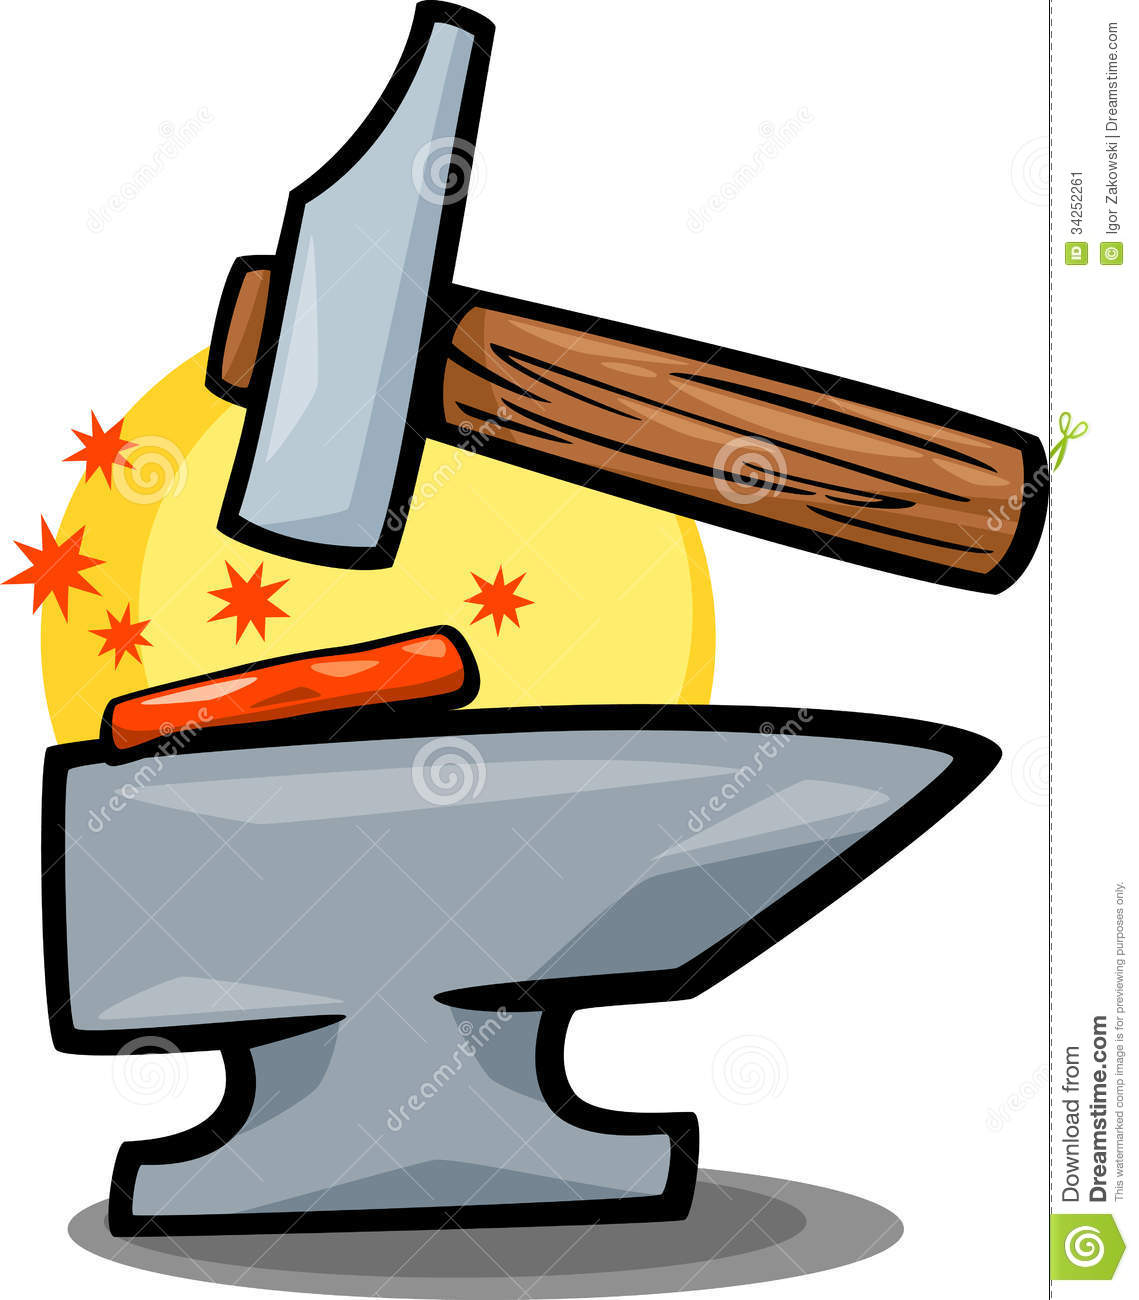 Hammer And Anvil Clip Art Cartoon Stock Image   Image  34252261